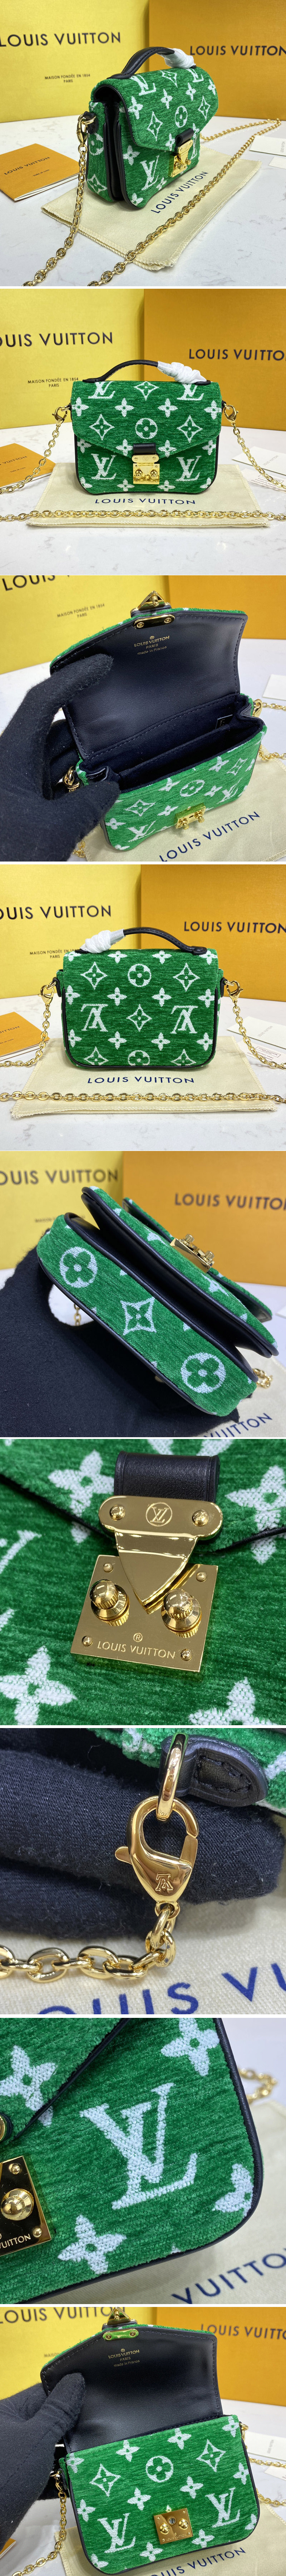 Replica Louis Vuitton M81494 LV Micro Métis bag in Green Monogram jacquard velvet